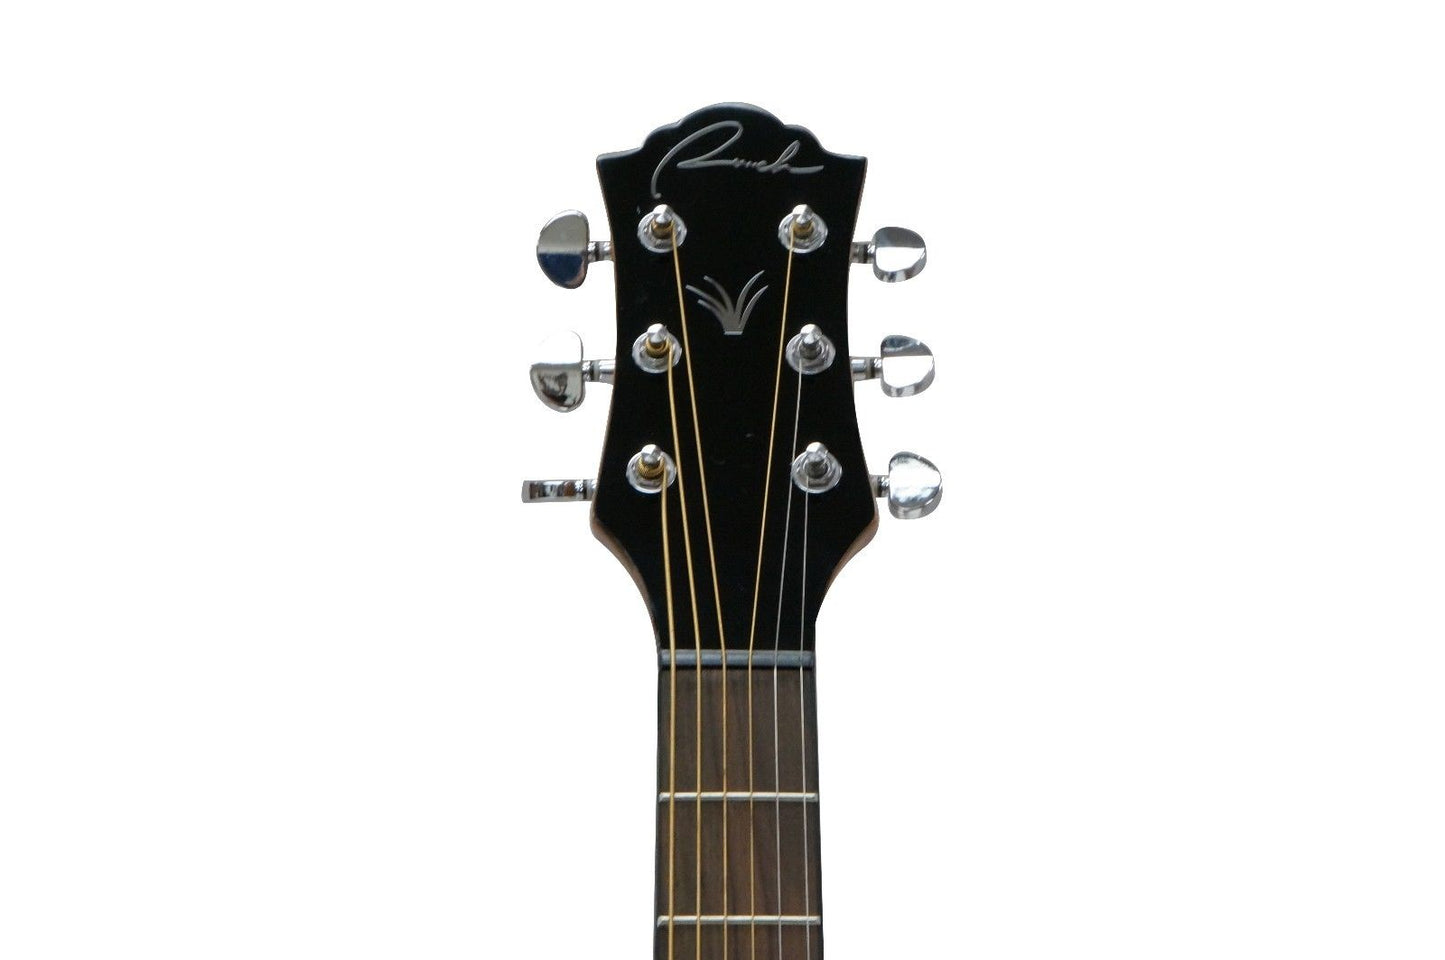 Ranch PG-D3C 41" Dreadnaught Acoustic Guitar